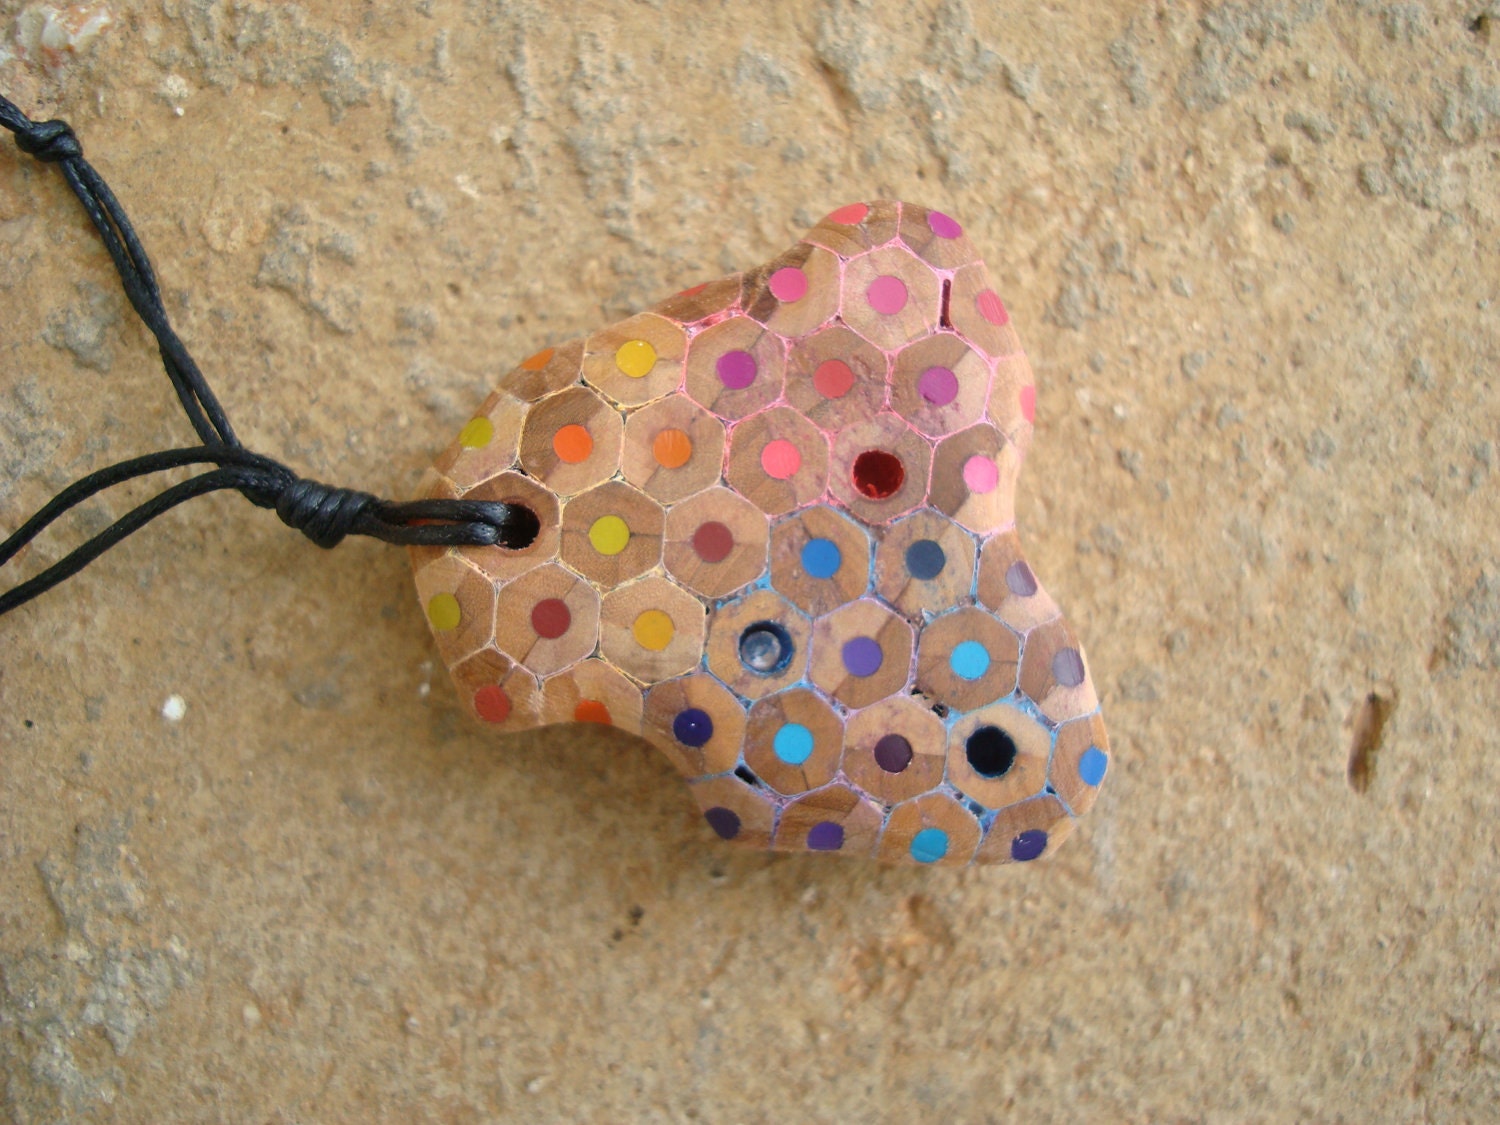 Colored pencils spring necklace with swarovski crystals.